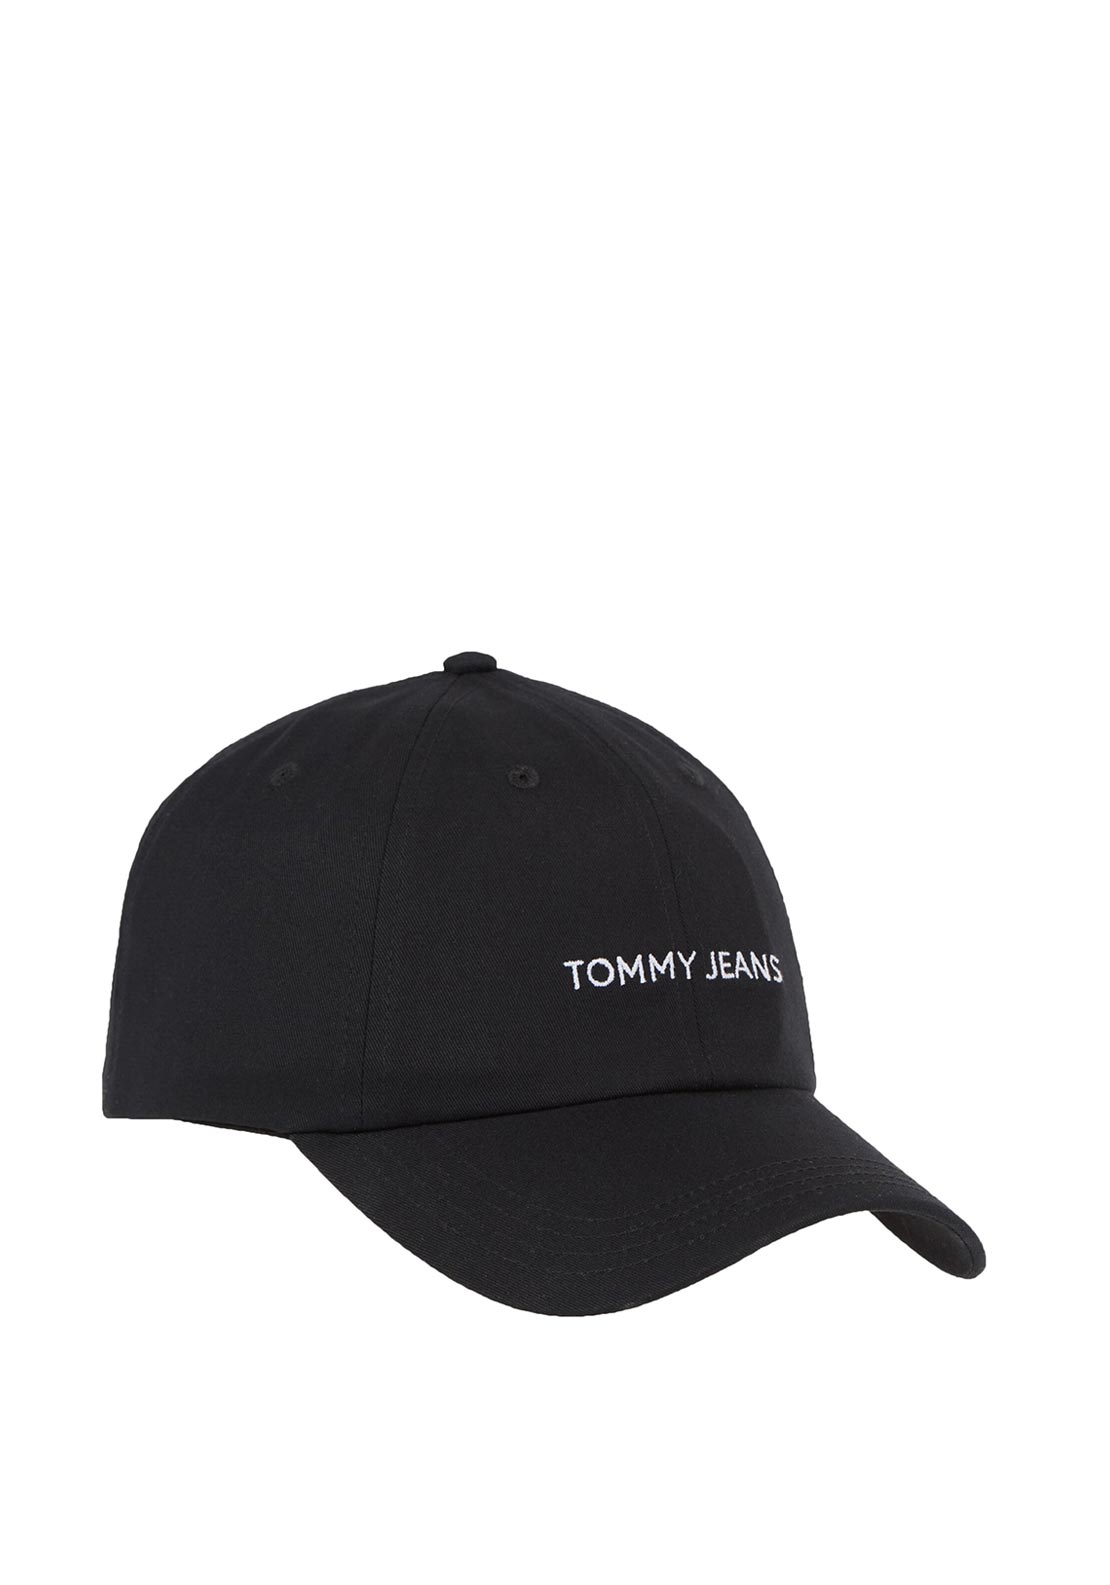 - Baseball Jeans Essential Logo McElhinneys Cap, Black Tommy